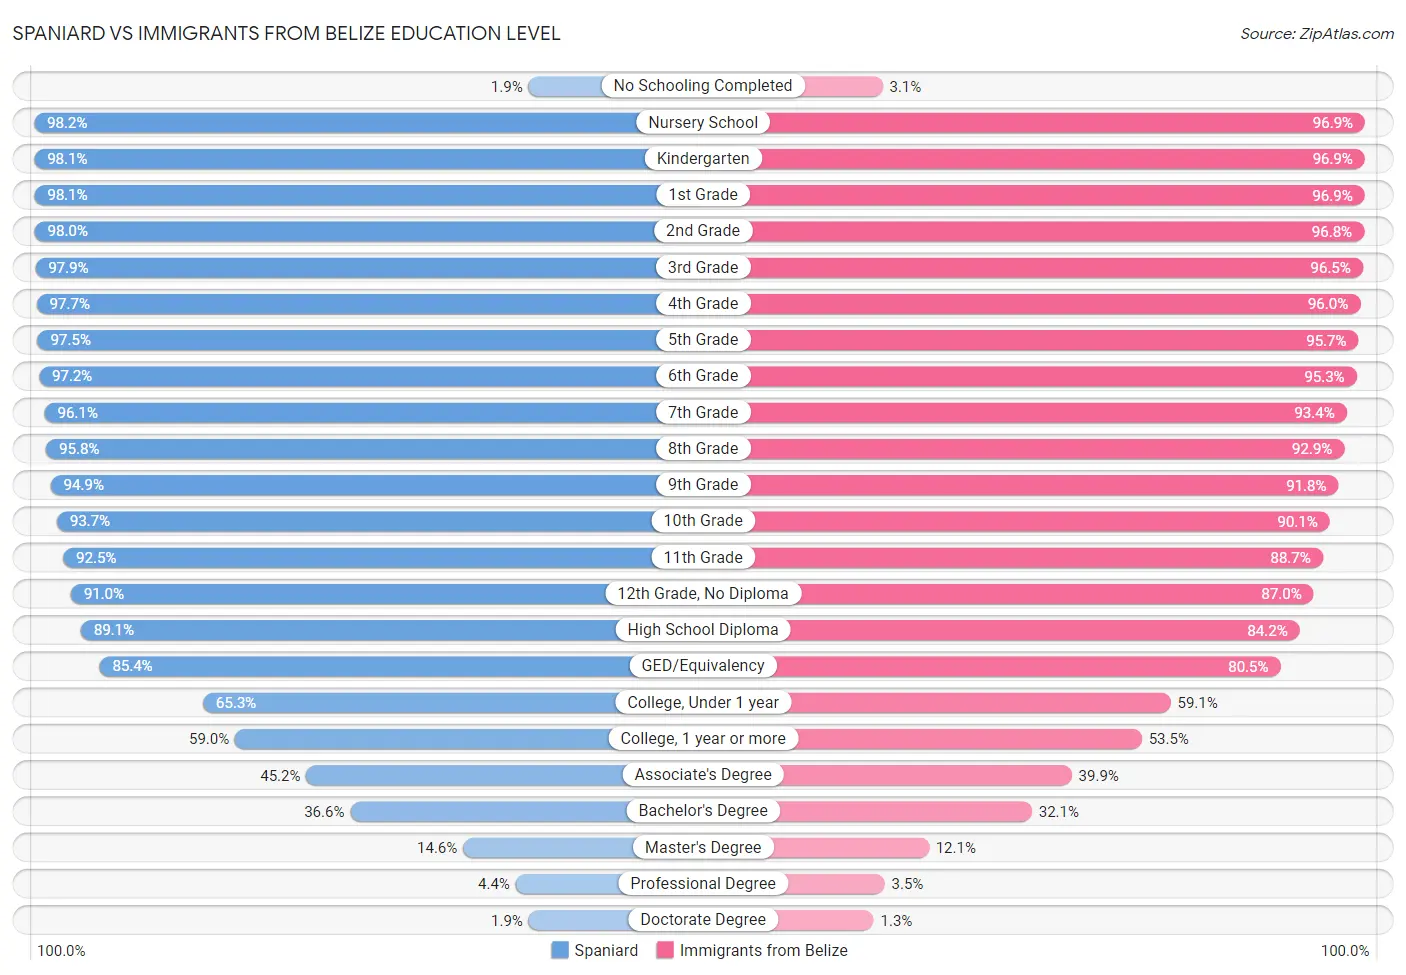 Spaniard vs Immigrants from Belize Education Level